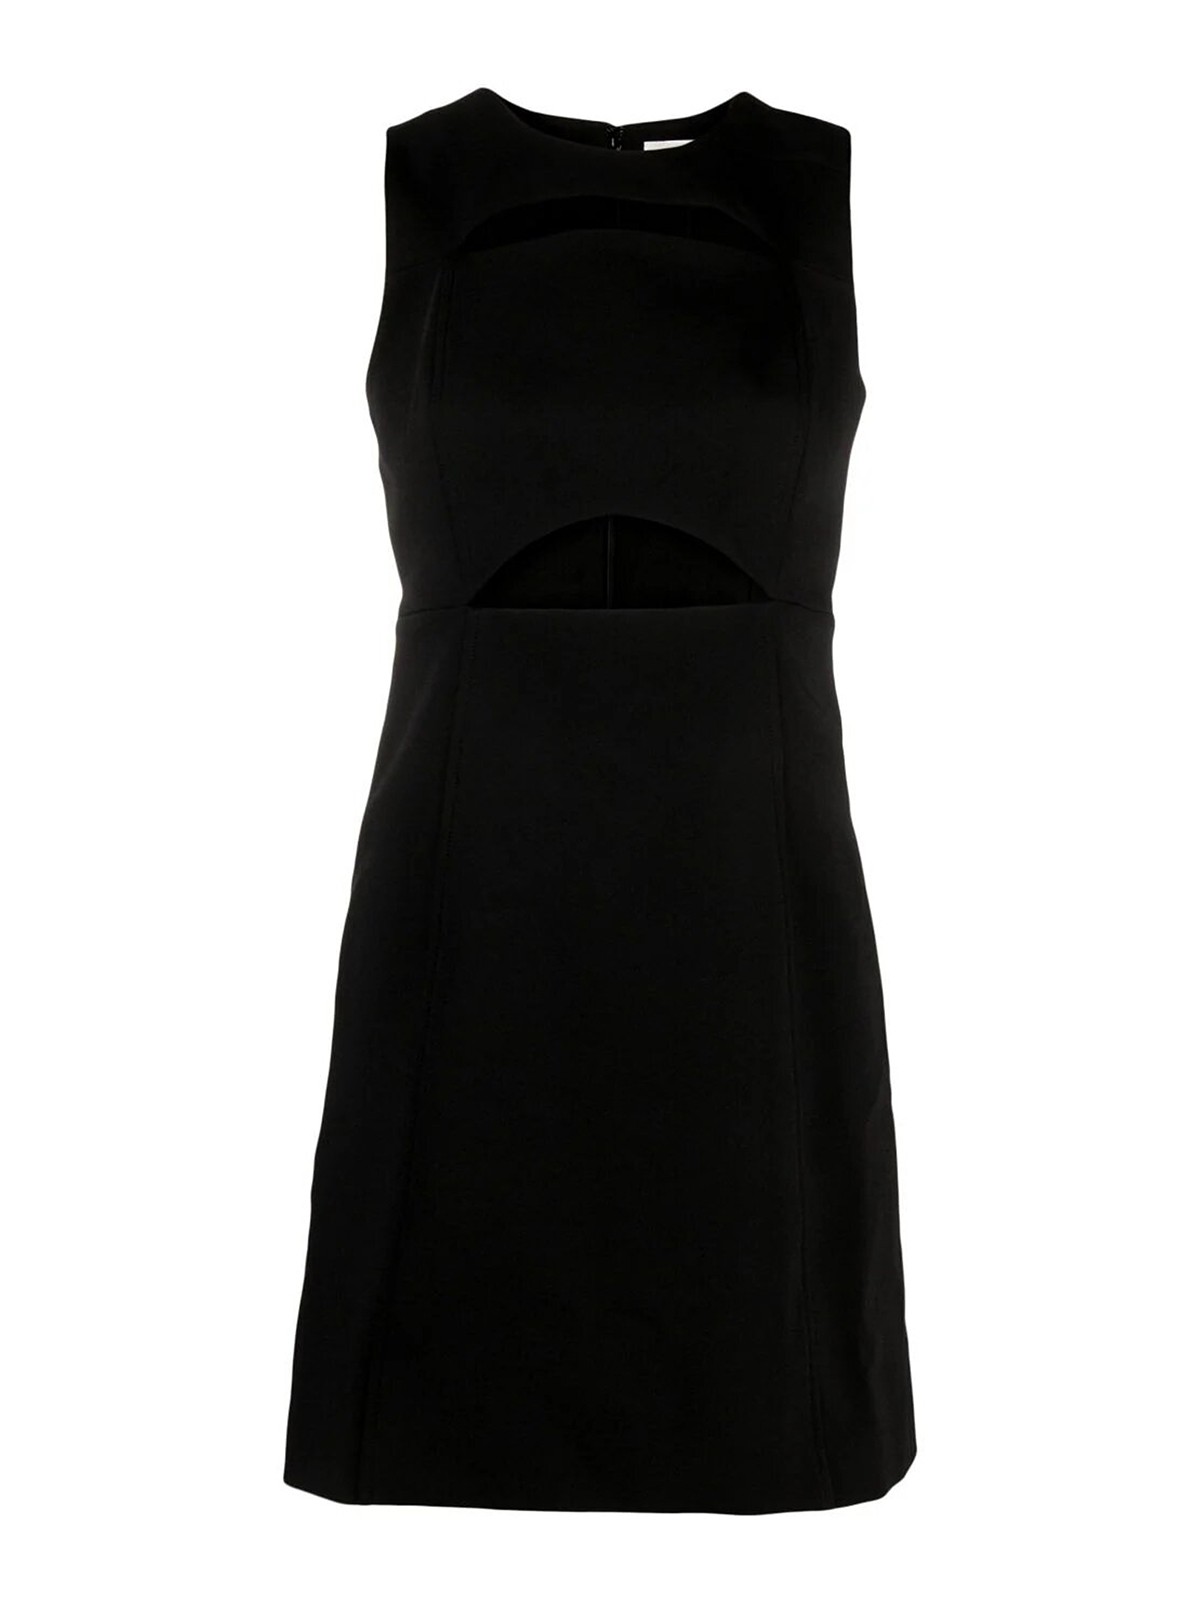 Michael Kors Cut Out Dress In Black